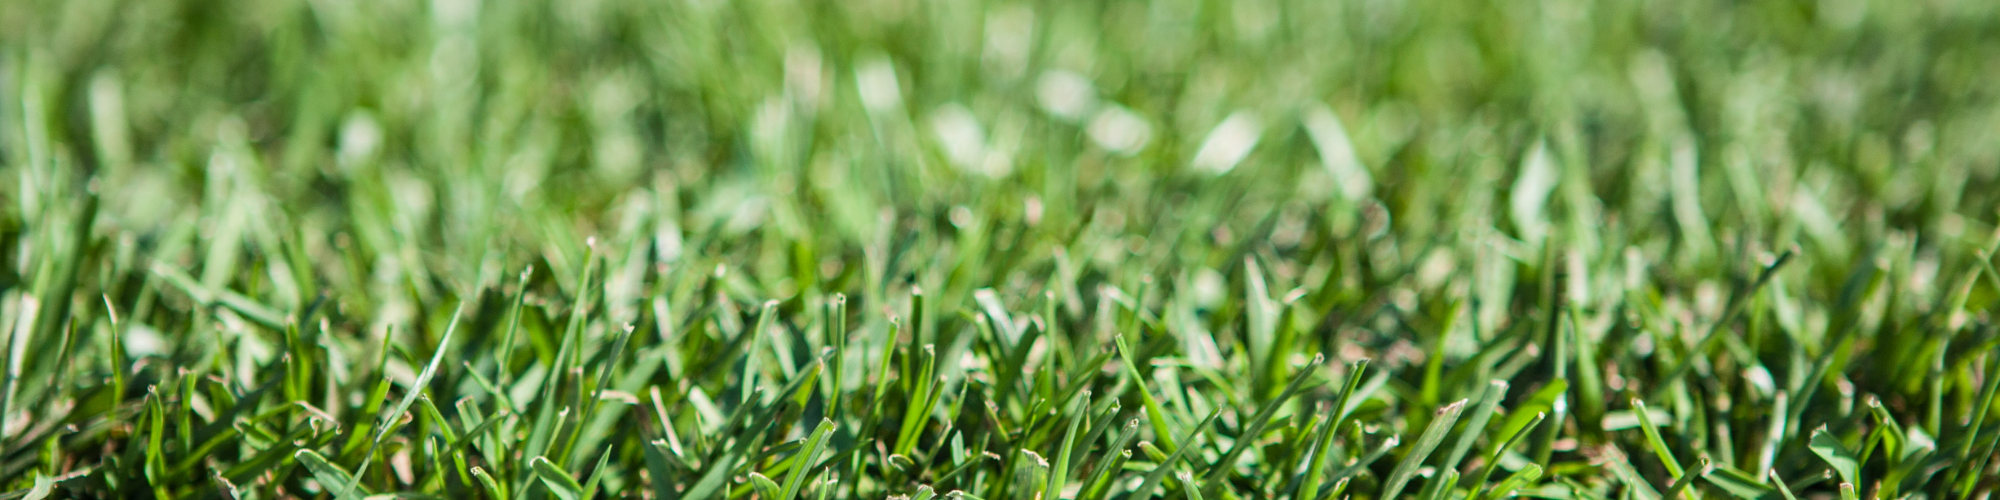 up-close image of grass